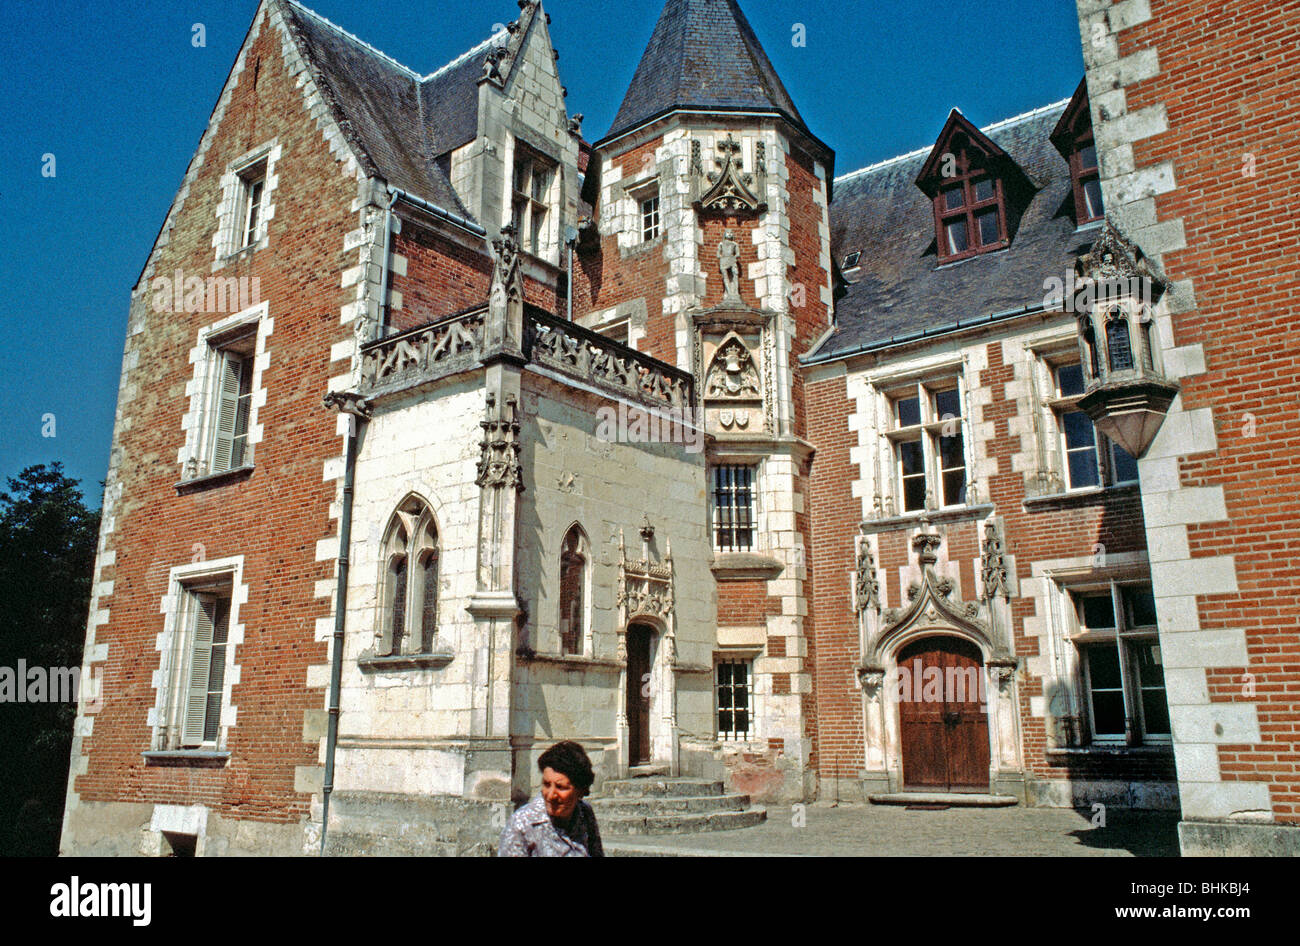 AMBOISE, Loiretal, Frankreich - Renaissance-Schloss "Clos ...